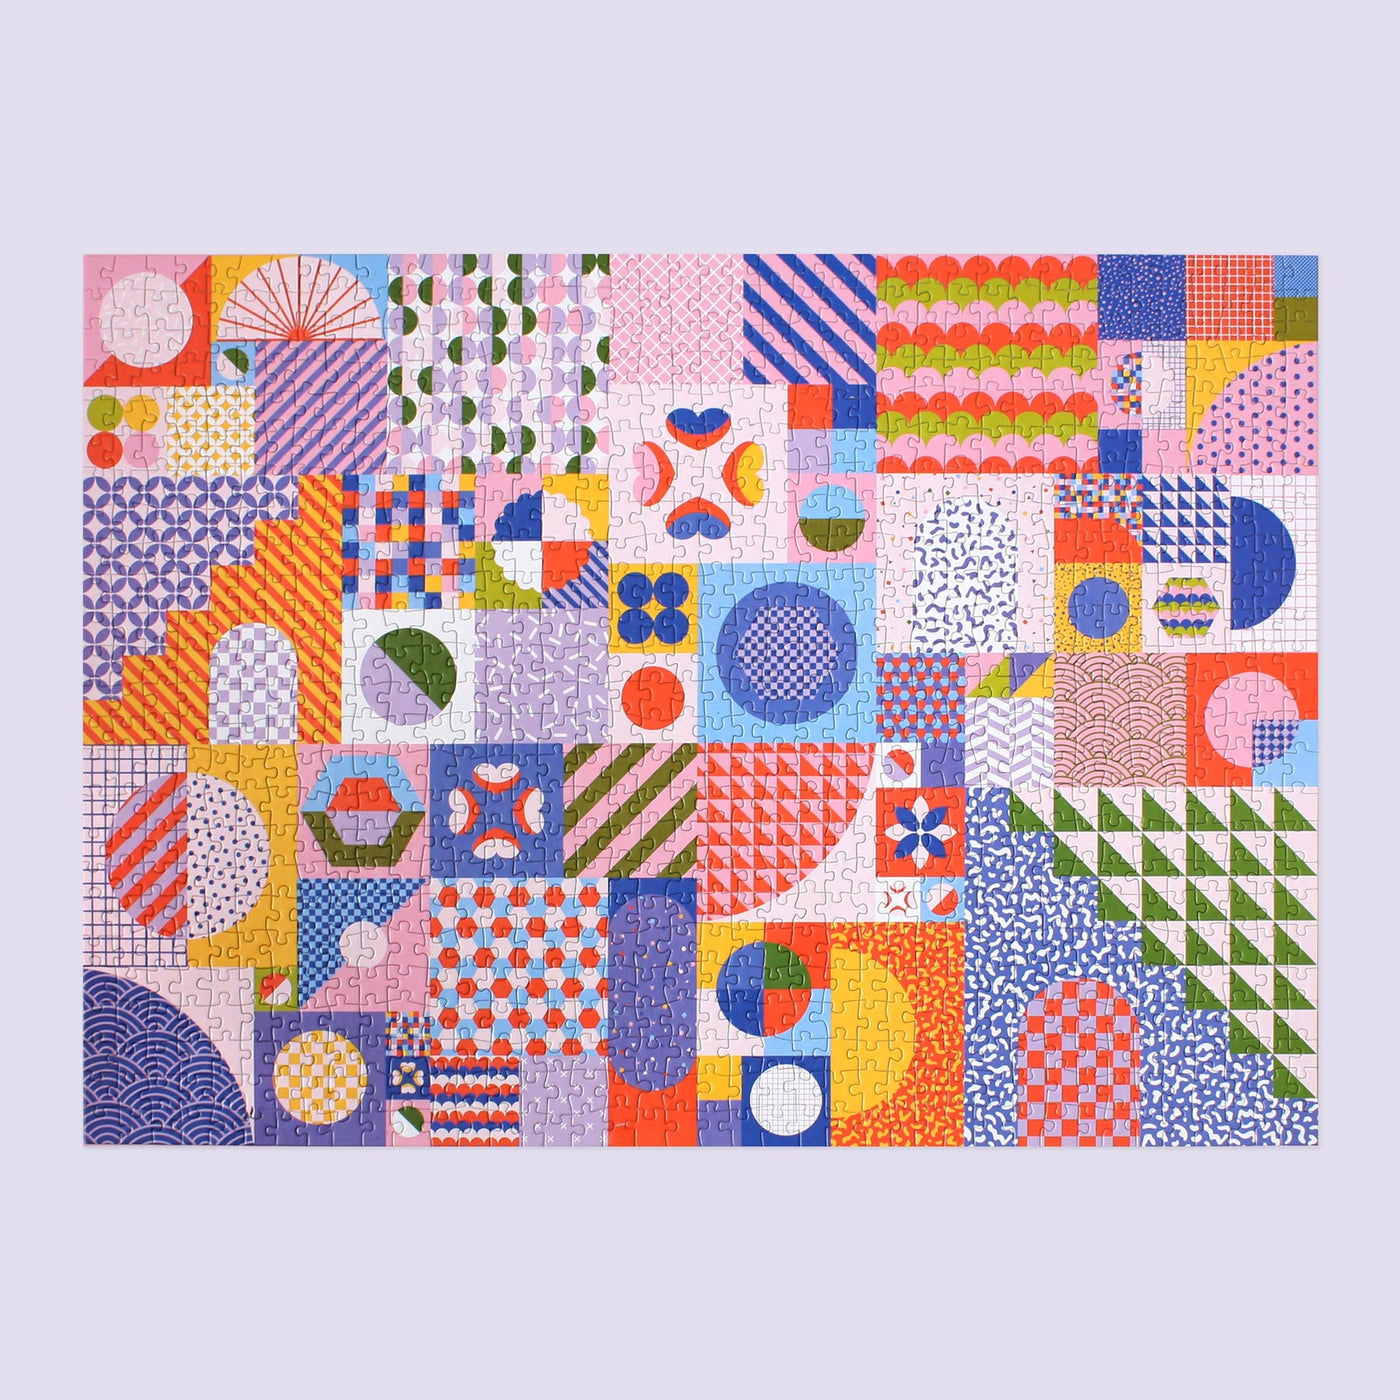 Tessellate | 1,000 Piece Jigsaw Puzzle